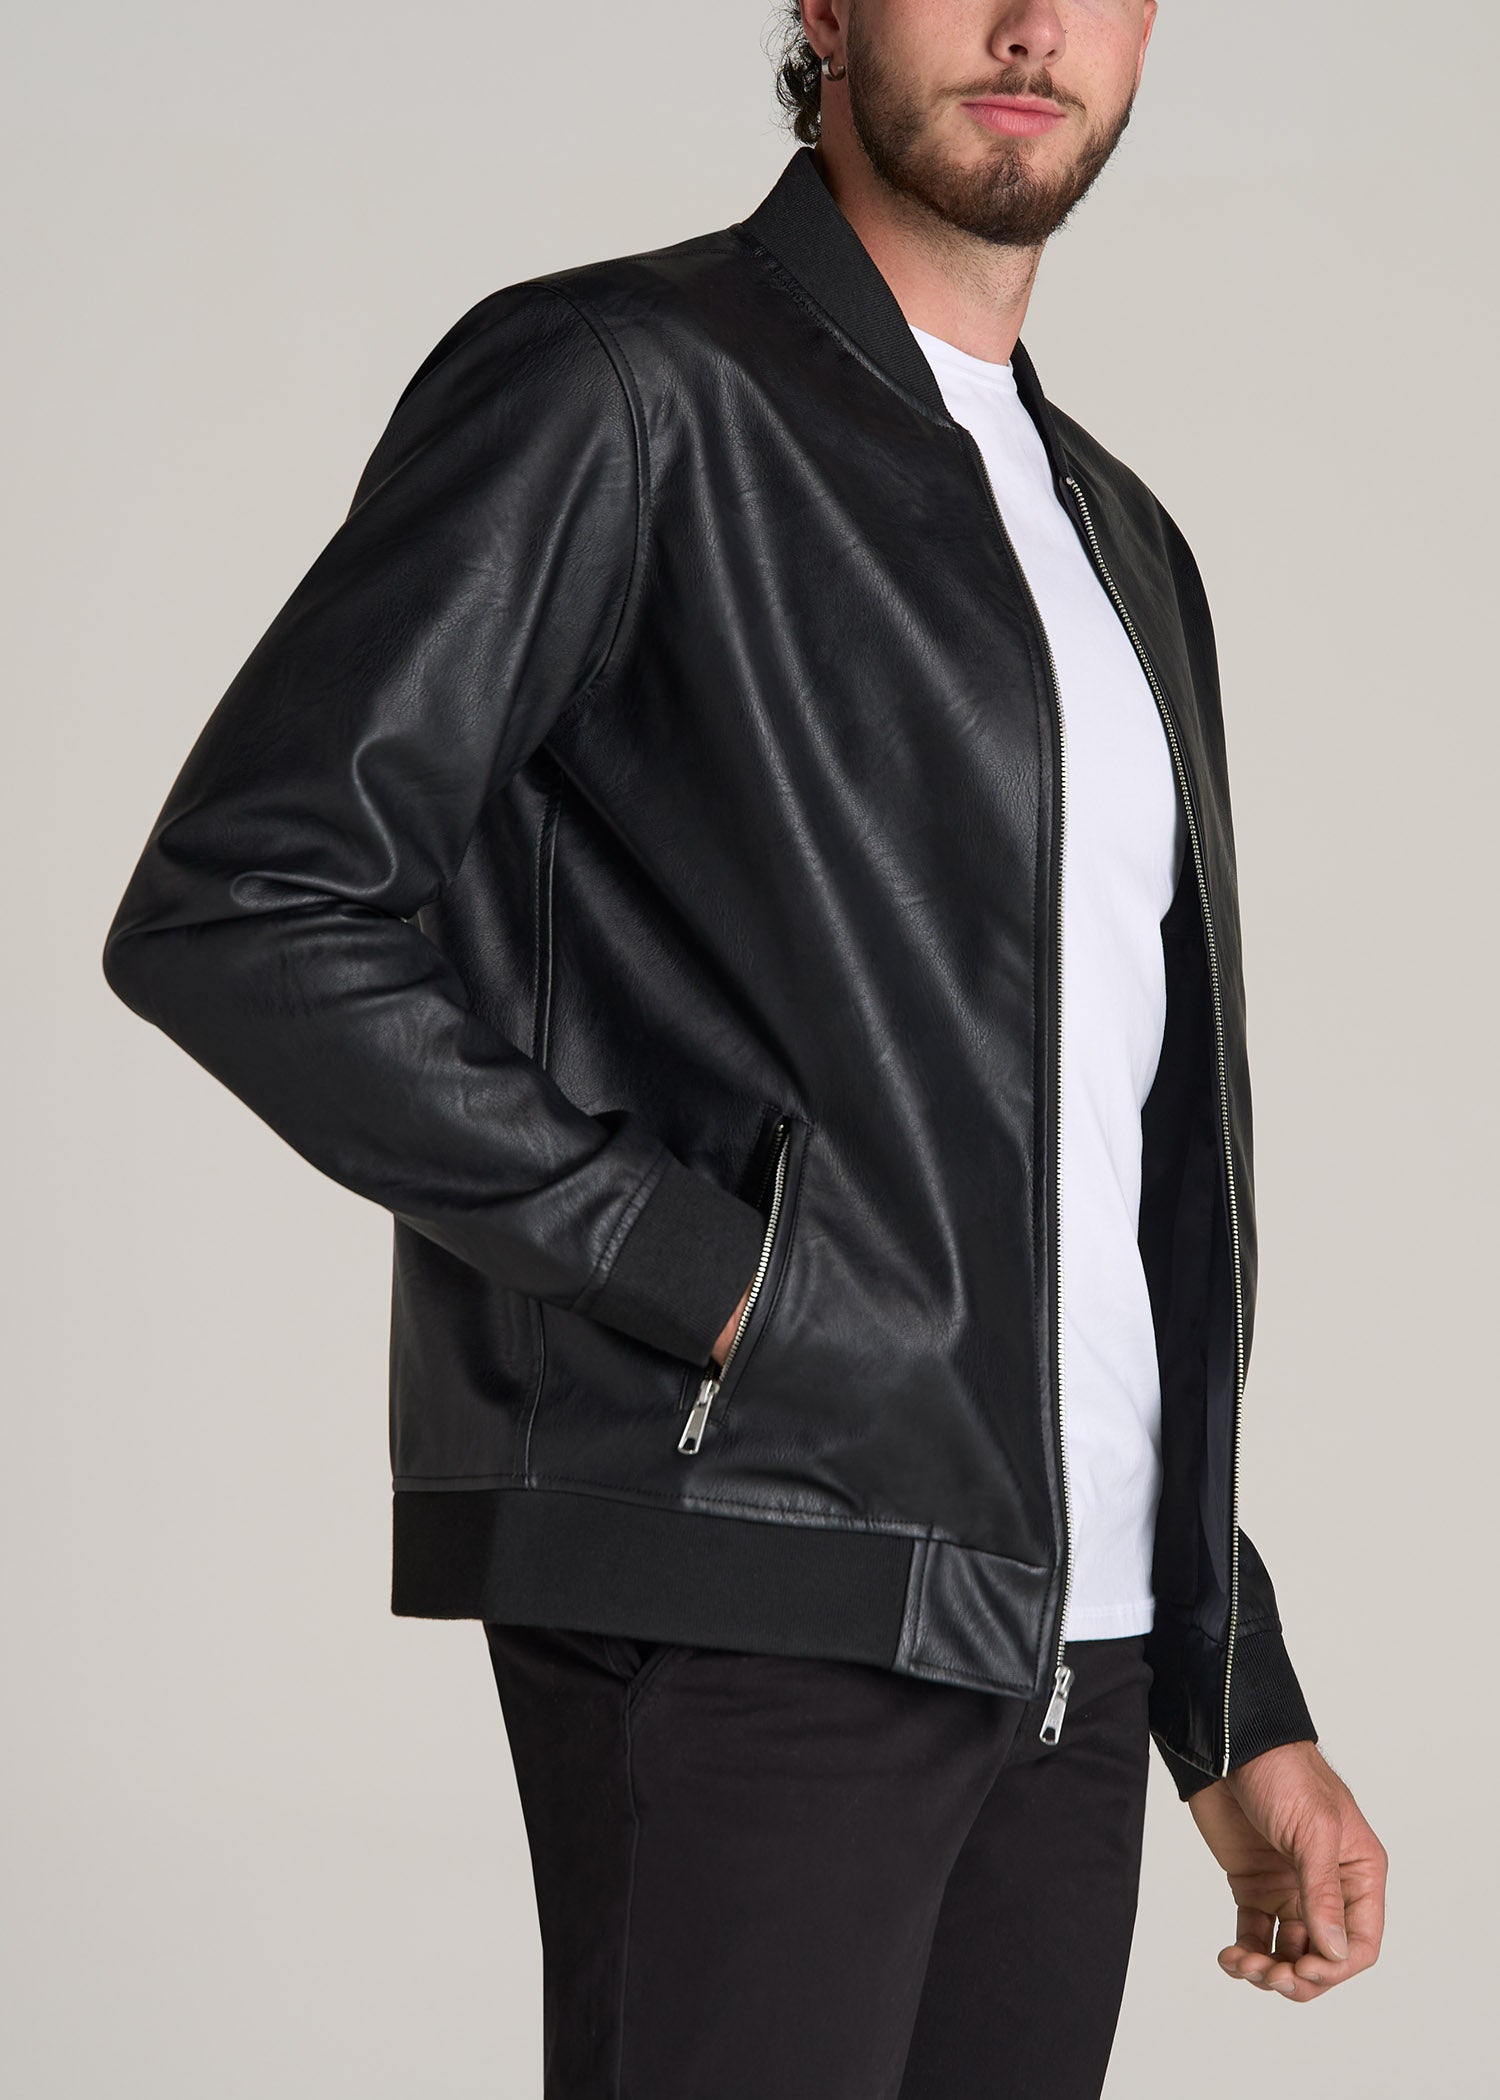 HOOD CREW Men's Classic Zip Up Bomber Faux Leather Jackets Black XXL -  ShopStyle